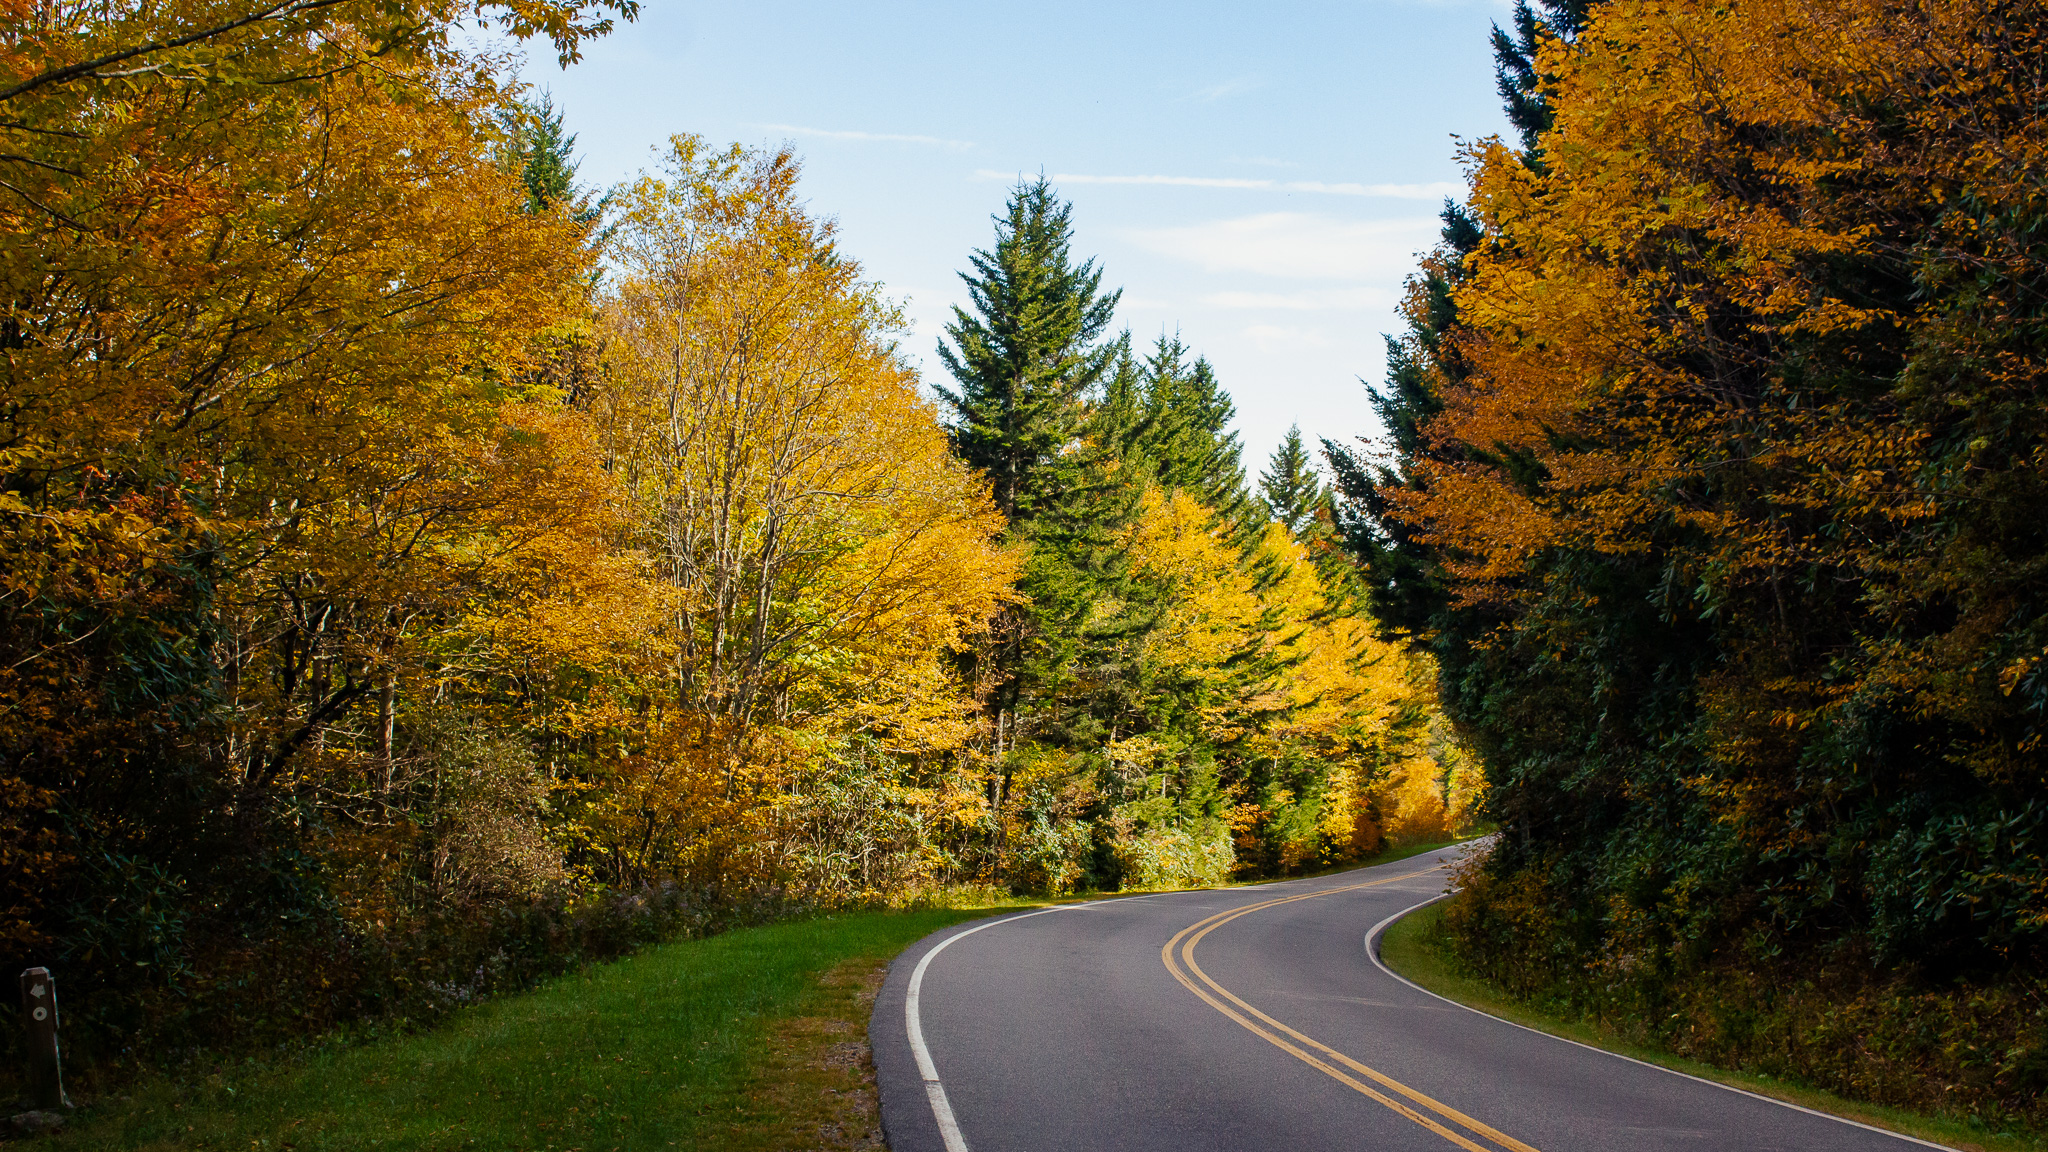 Peak fall color along a winding road